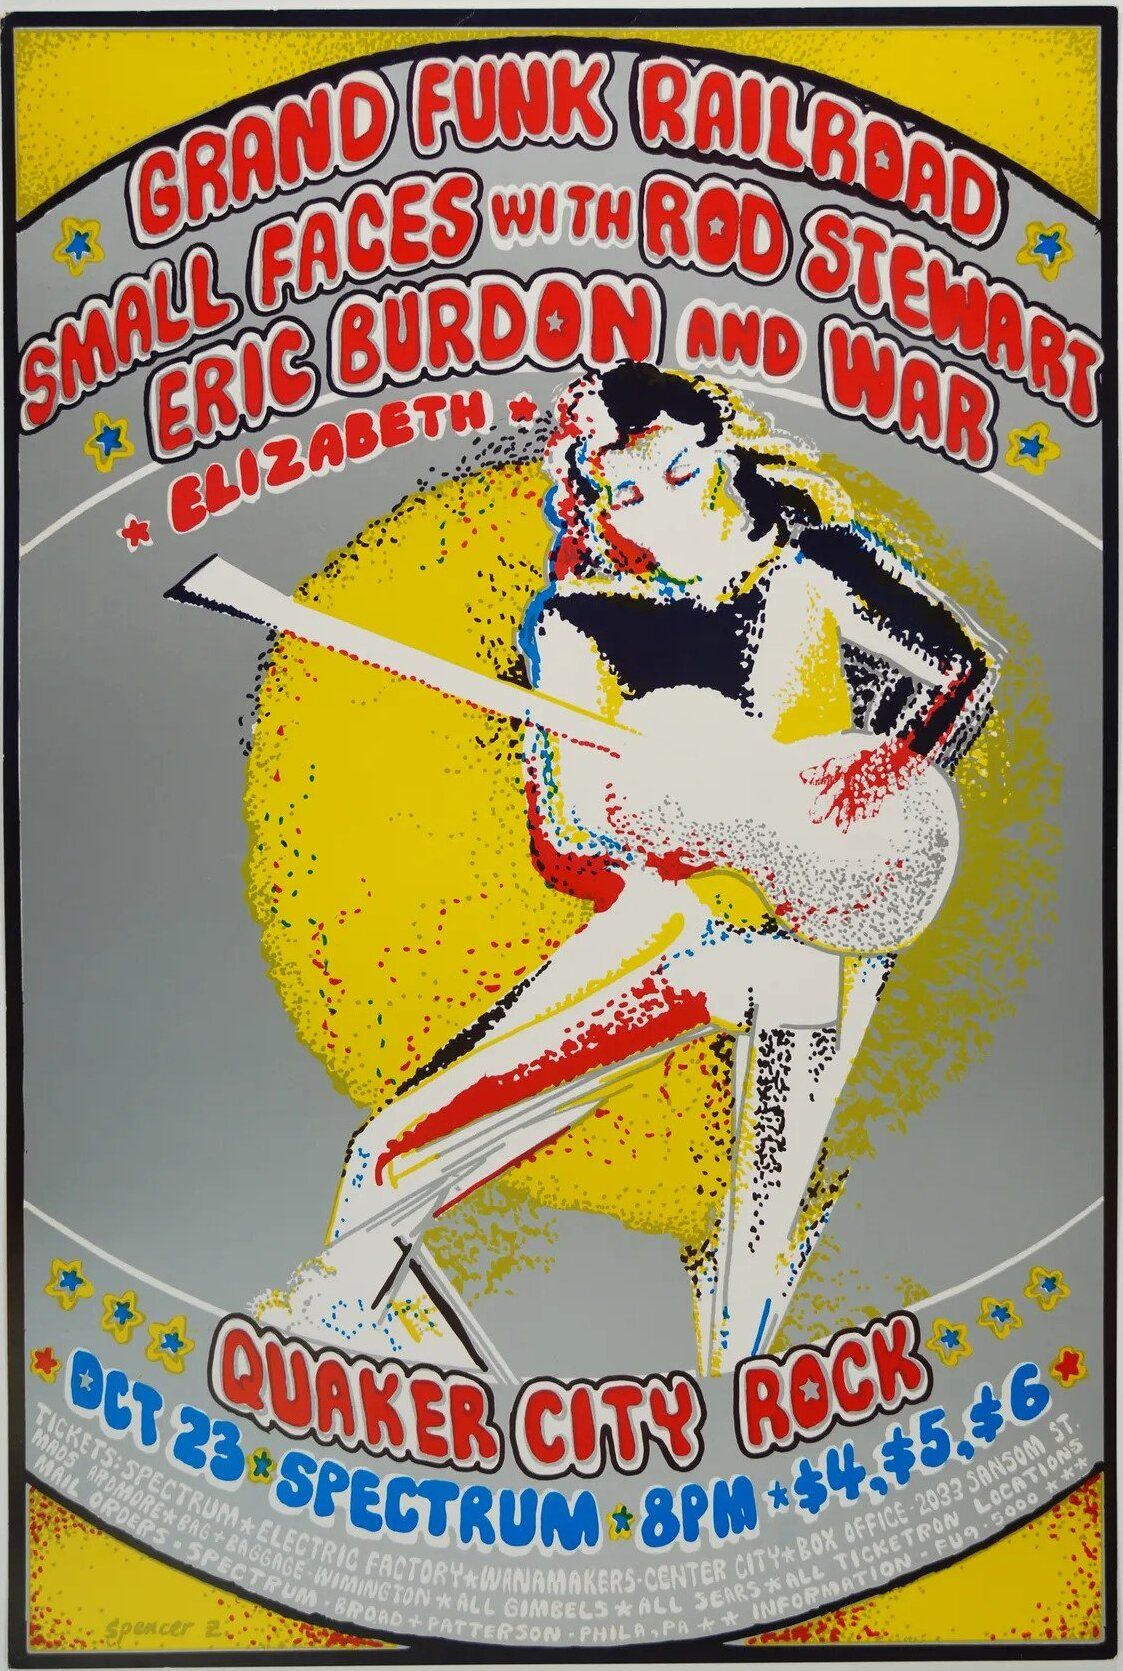 Quaker City Rock Festival featuring Rod Stewart & Eric Burdon 1970